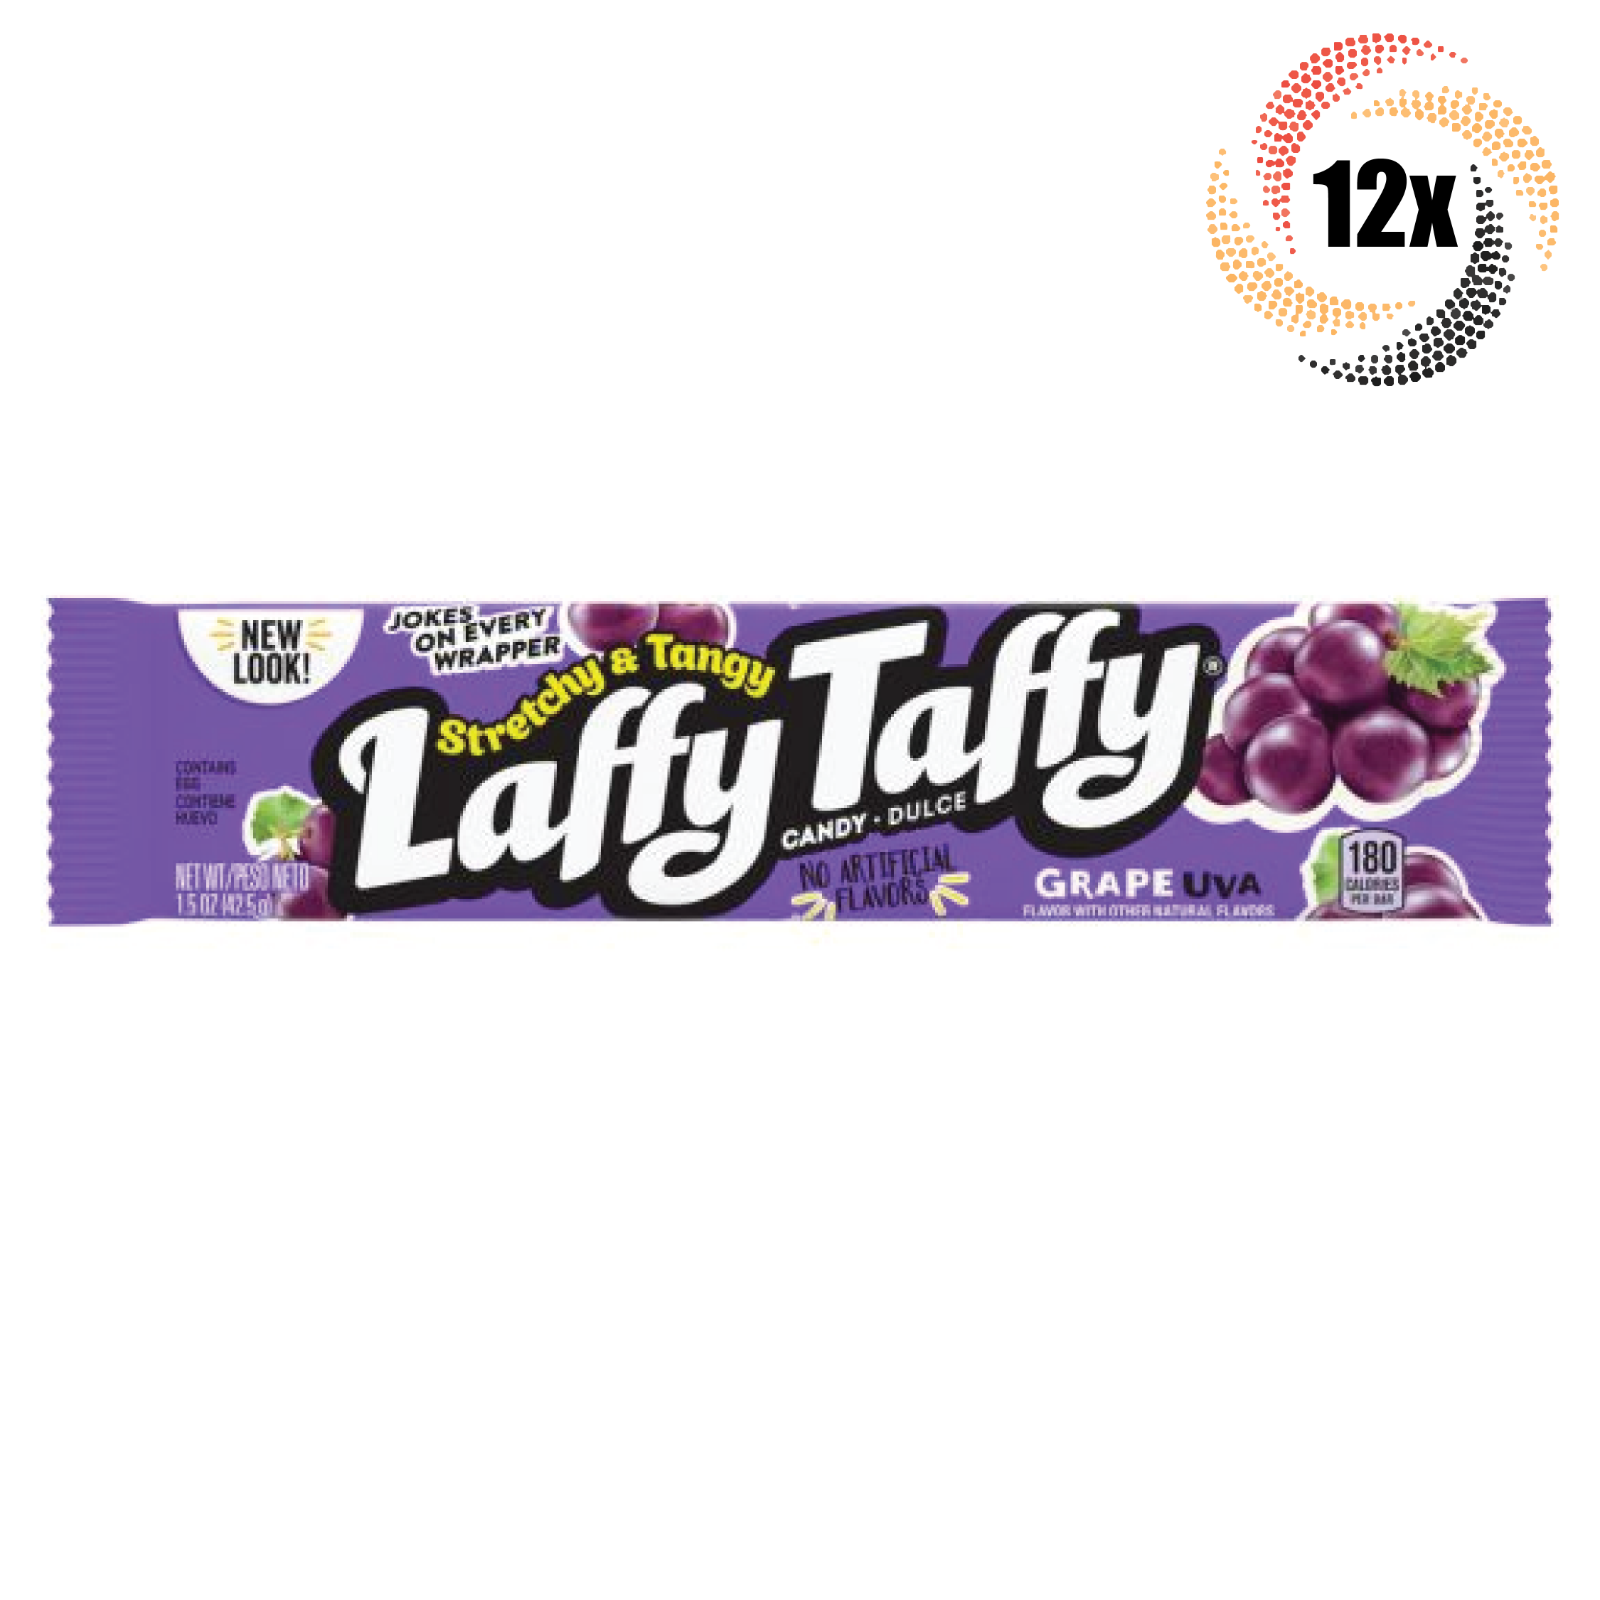 12x Bars | Laffy Taffy Grape Flavor Candy Bar Stretchy & Tangy | 1.5oz | - $29.27